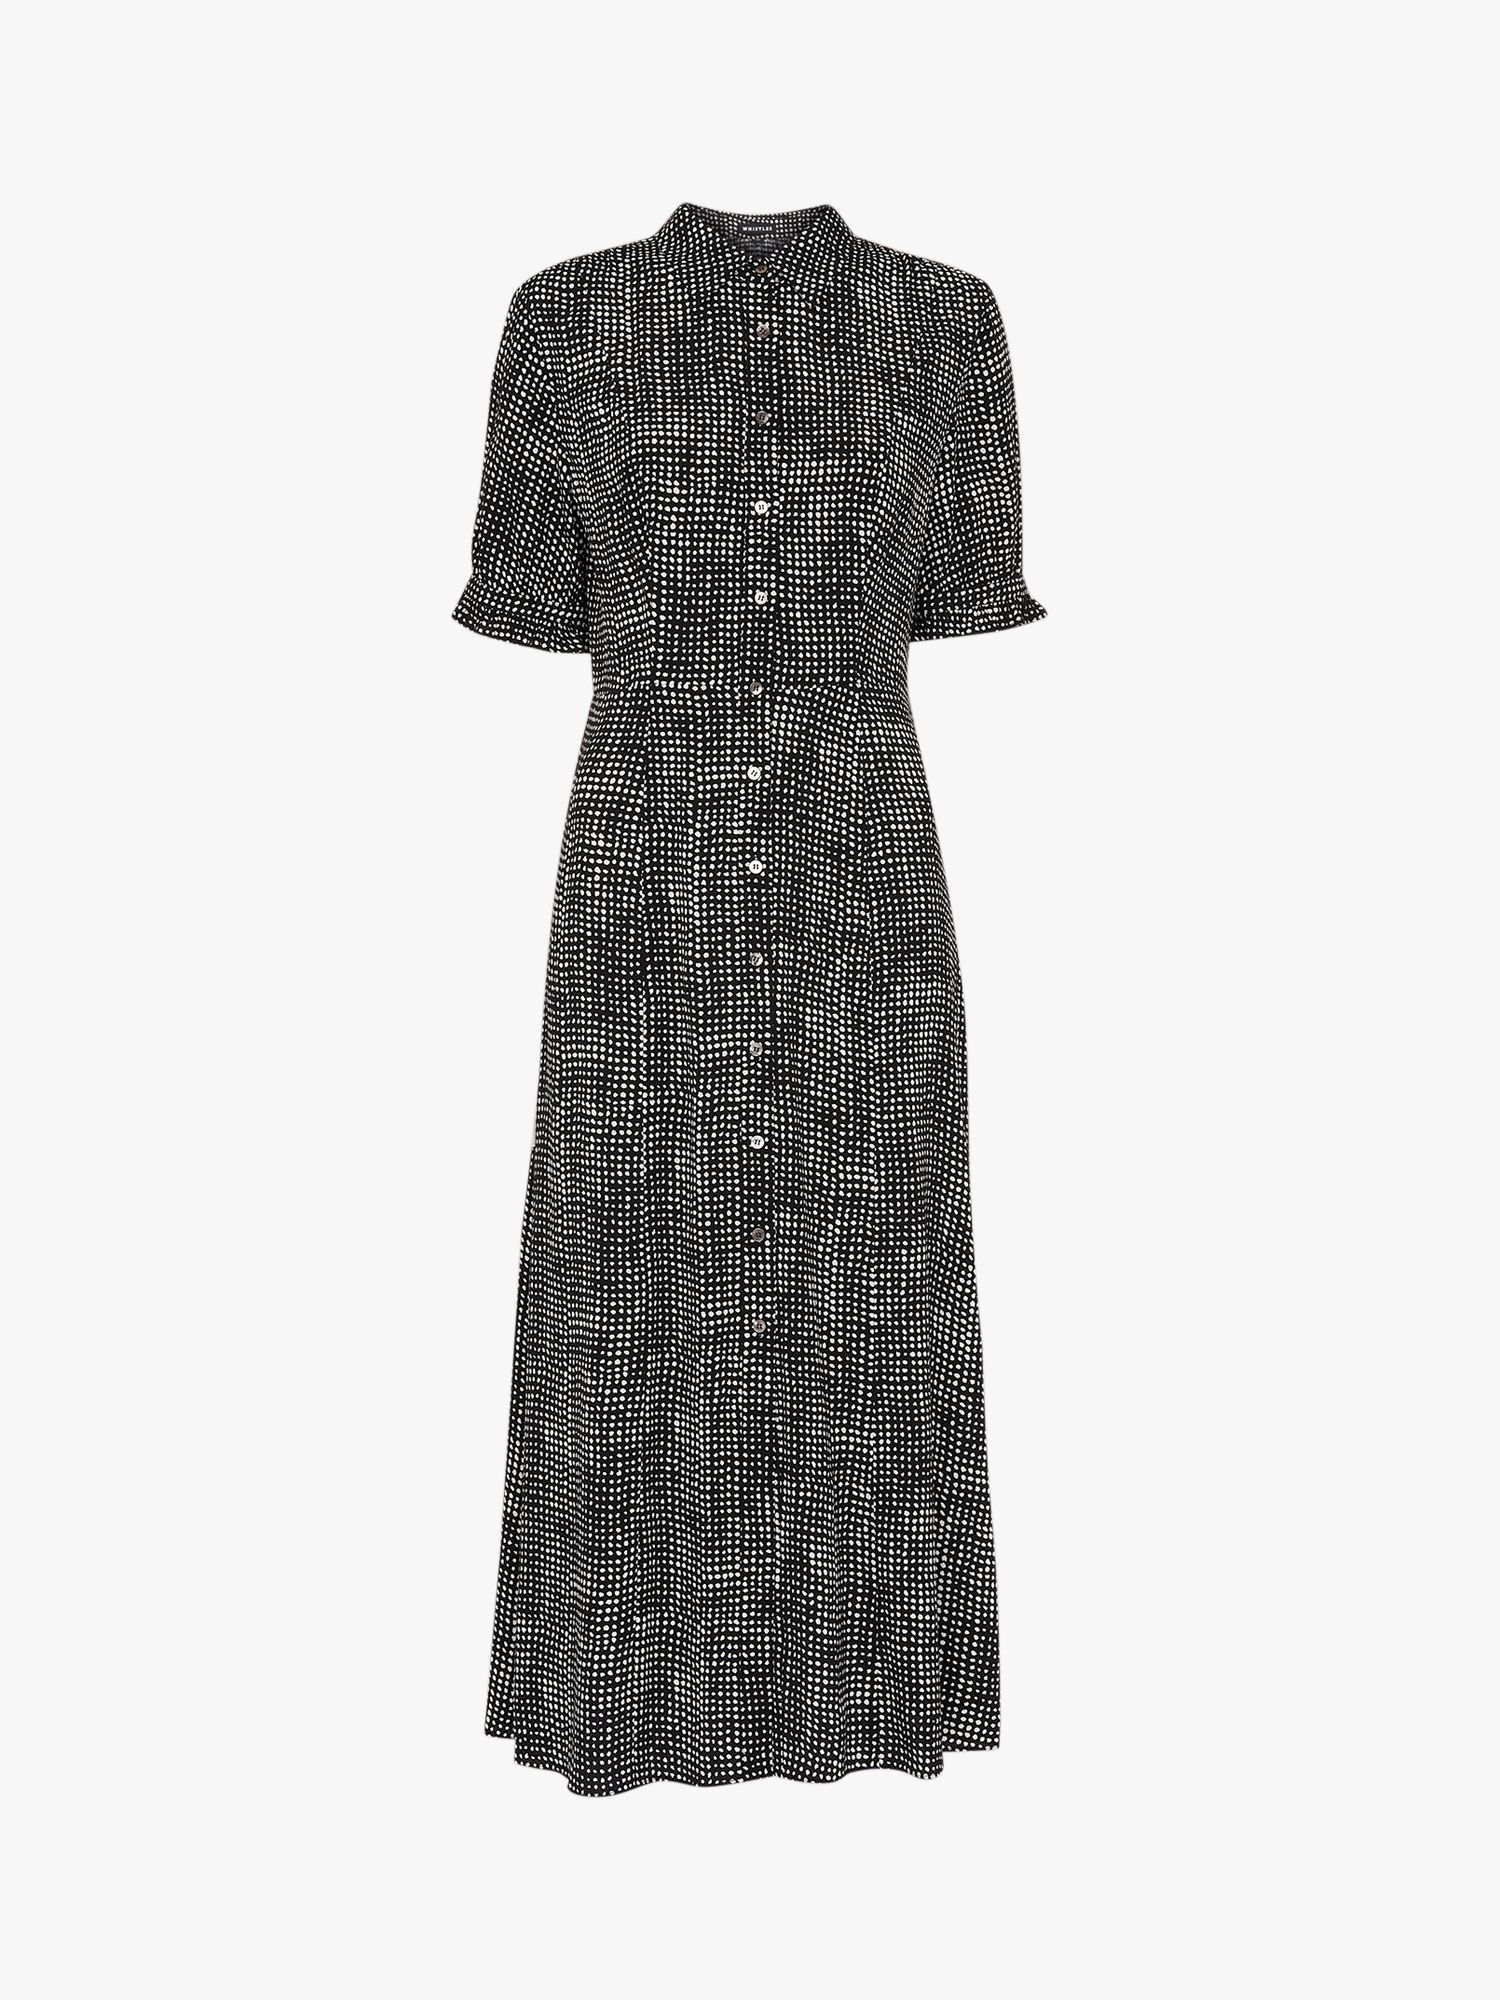 Whistles Peri Spotted Check Midi Shirt Dress, Black/Multi, 6